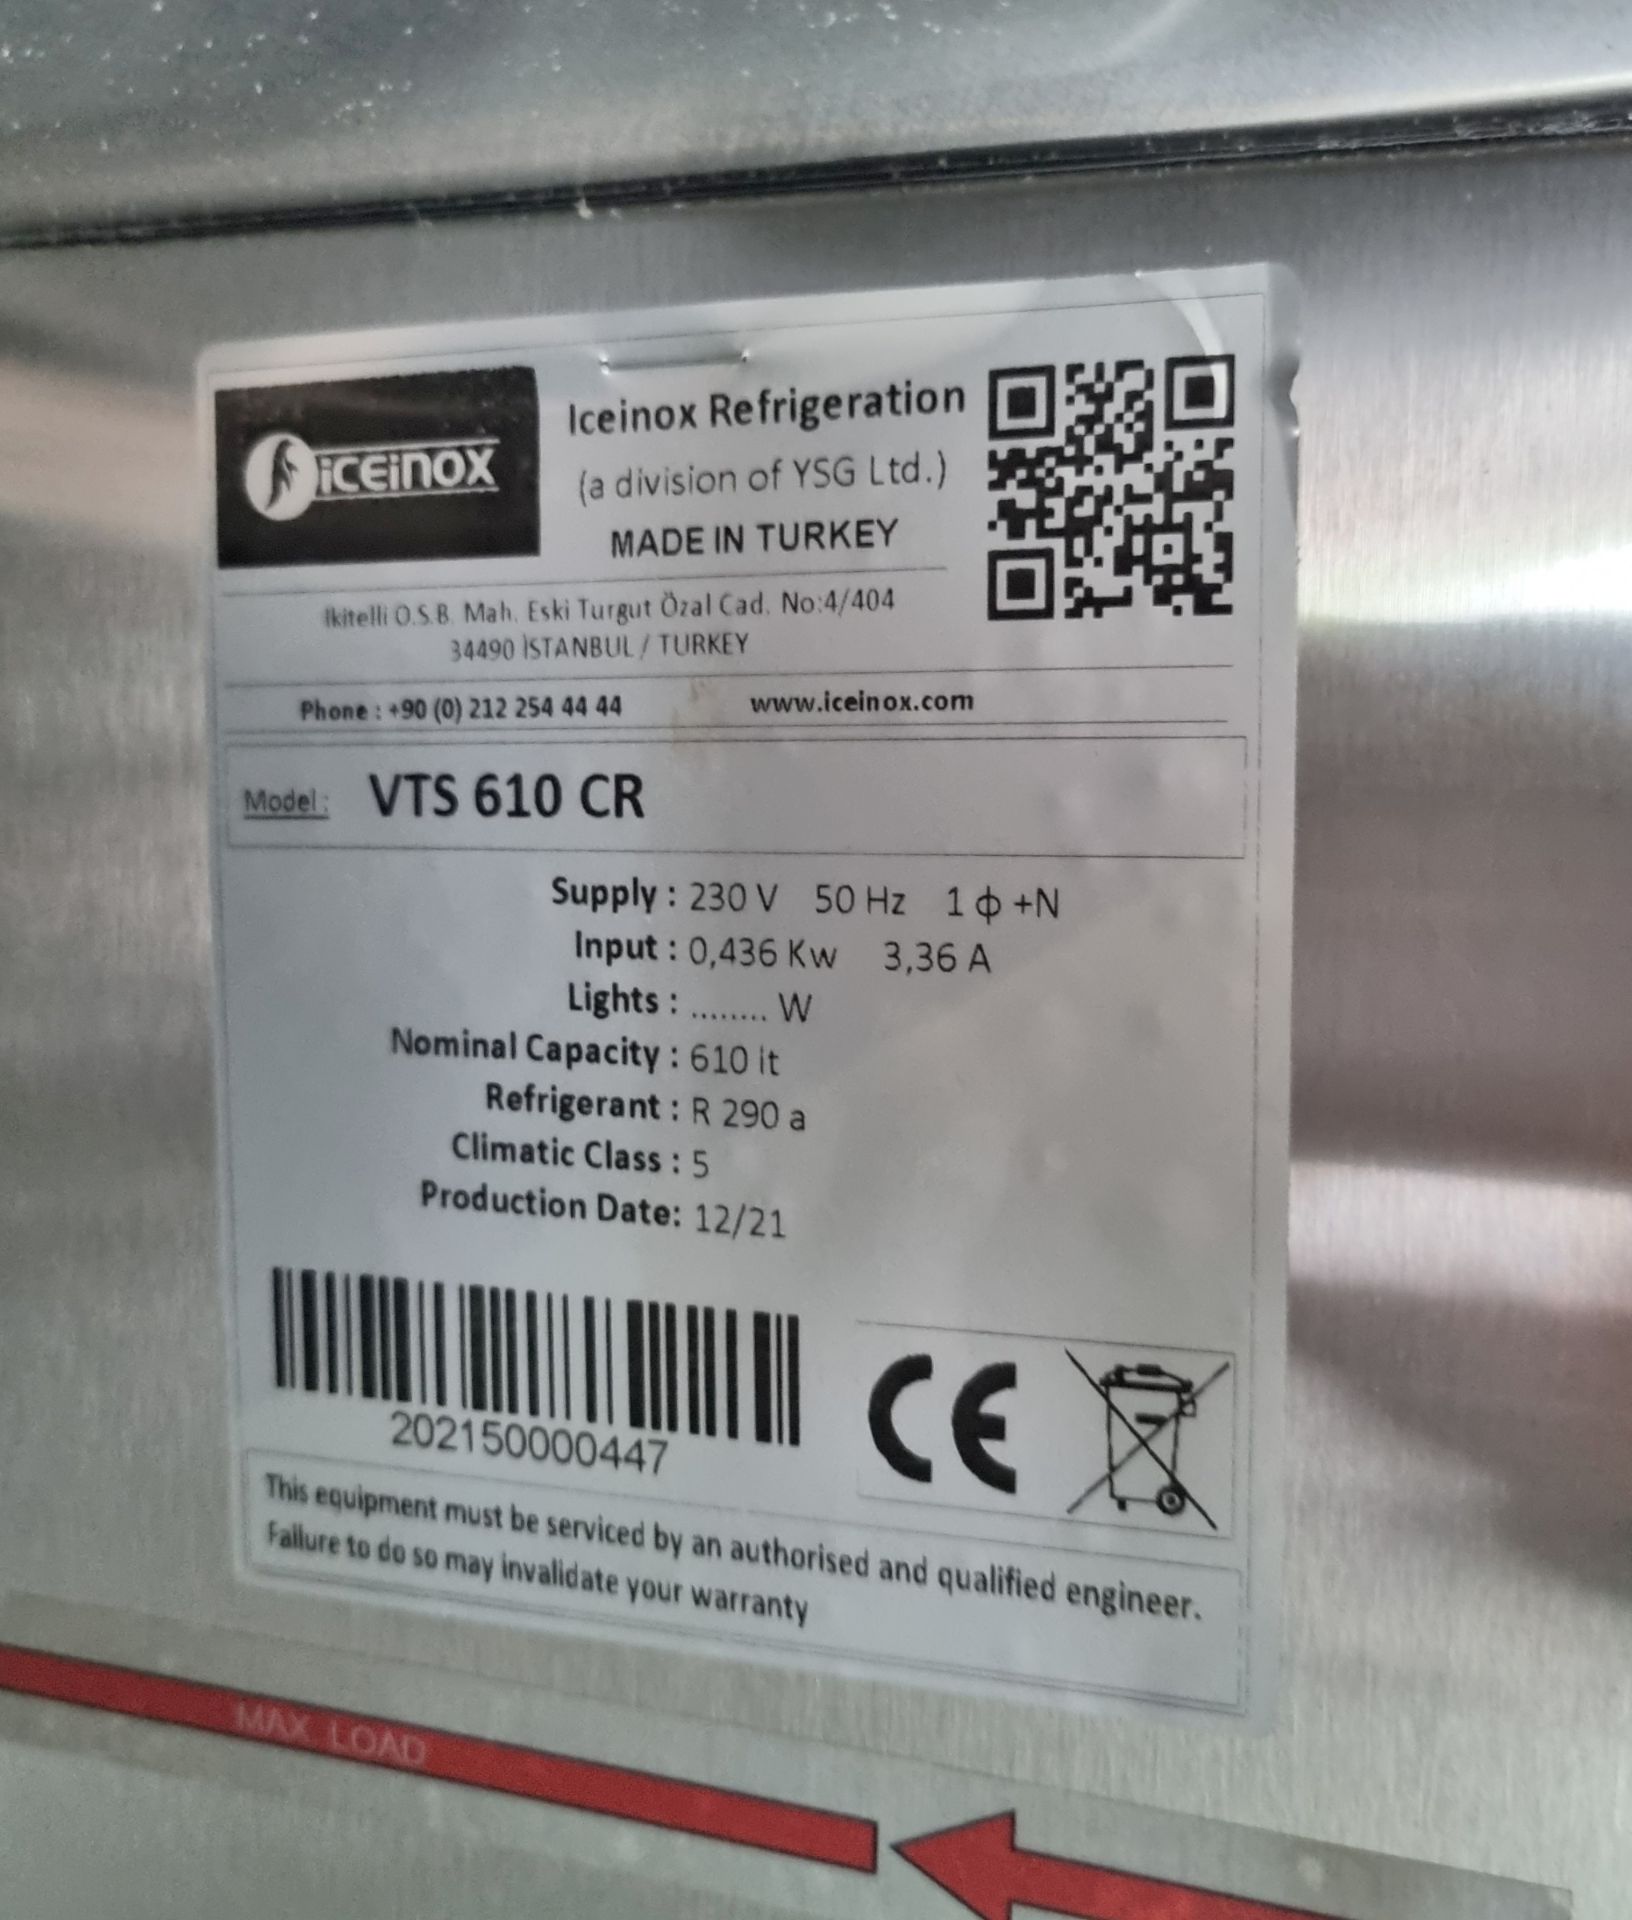 Ice Inox VTS 610 CR stainless steel single door upright fridge - W 700 x D 865 x H 2080mm - Image 4 of 4